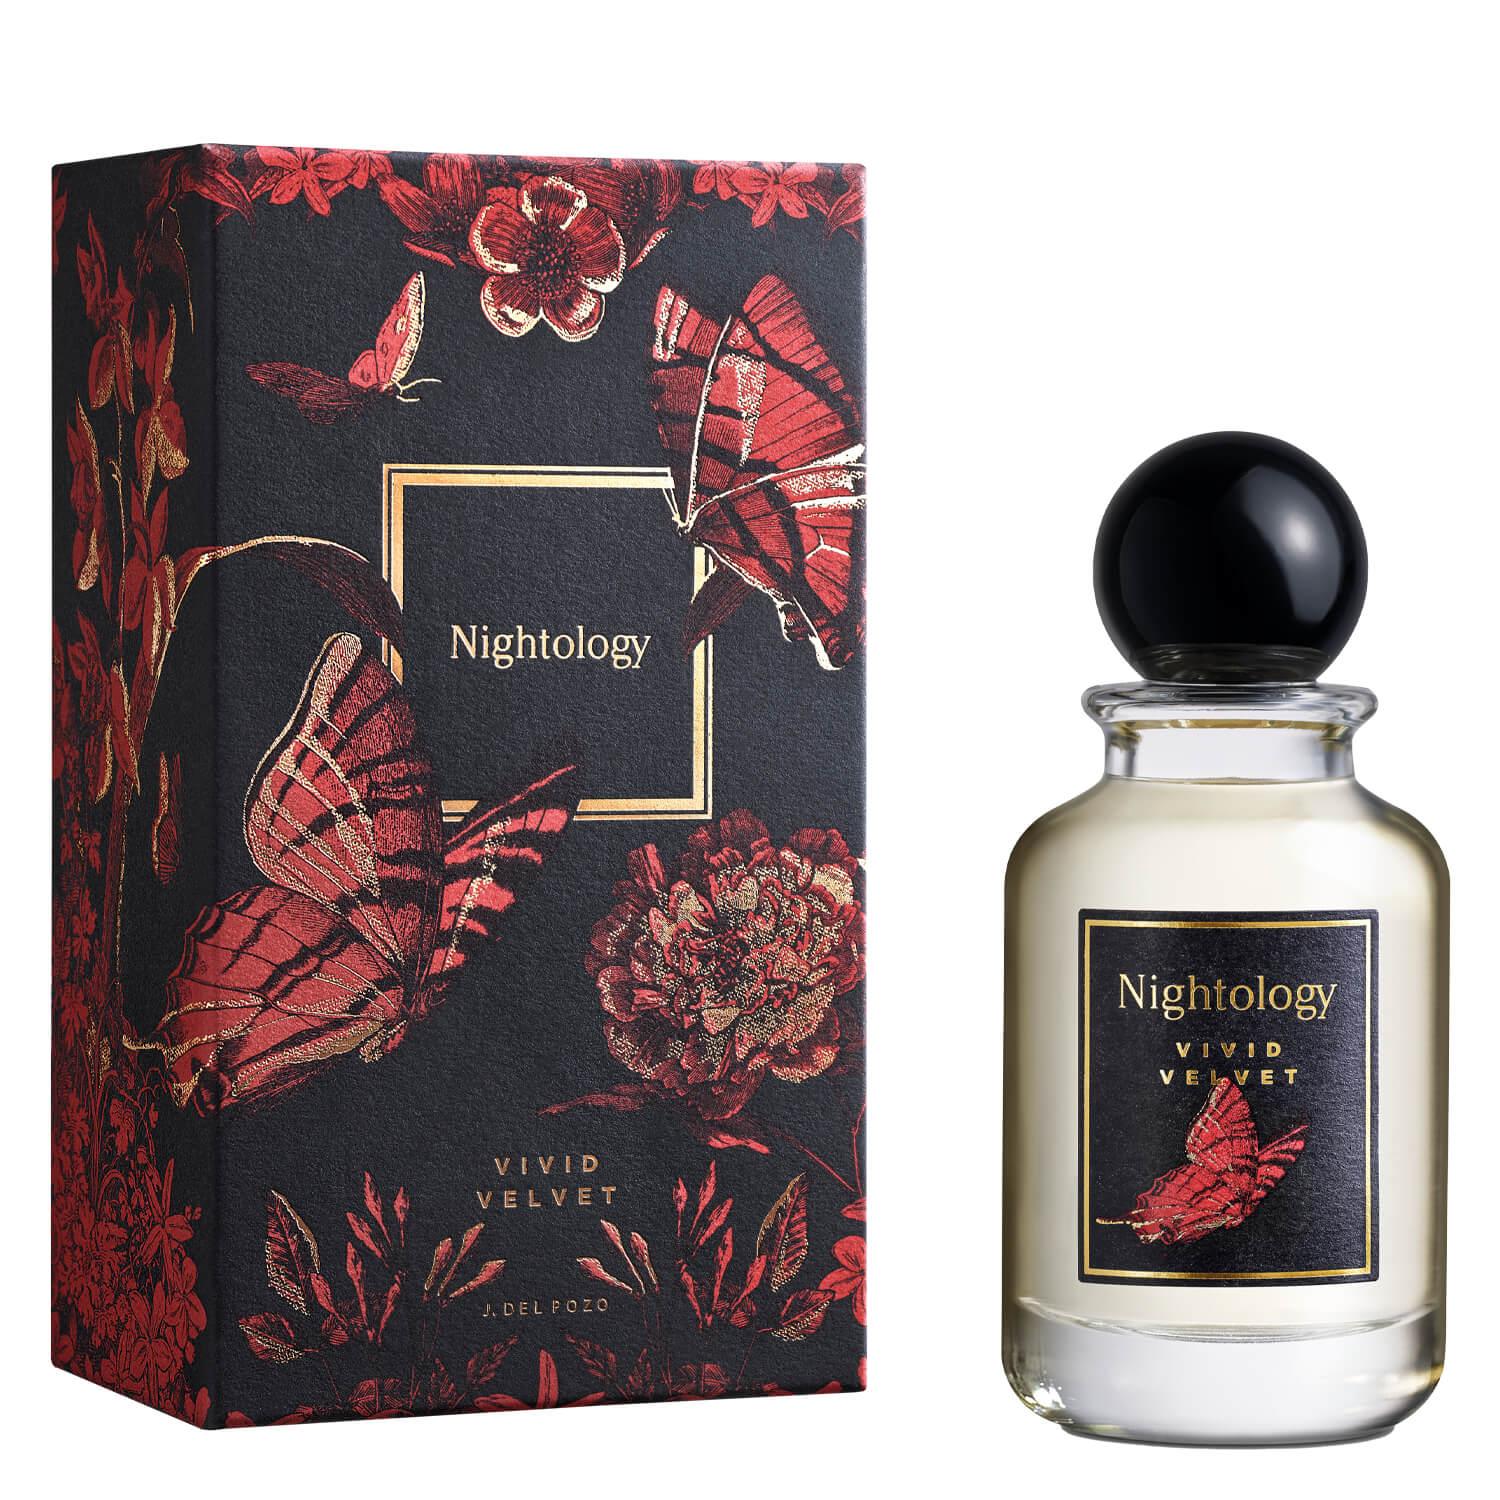 Nightology - Vivid Velvet Eau de Parfum